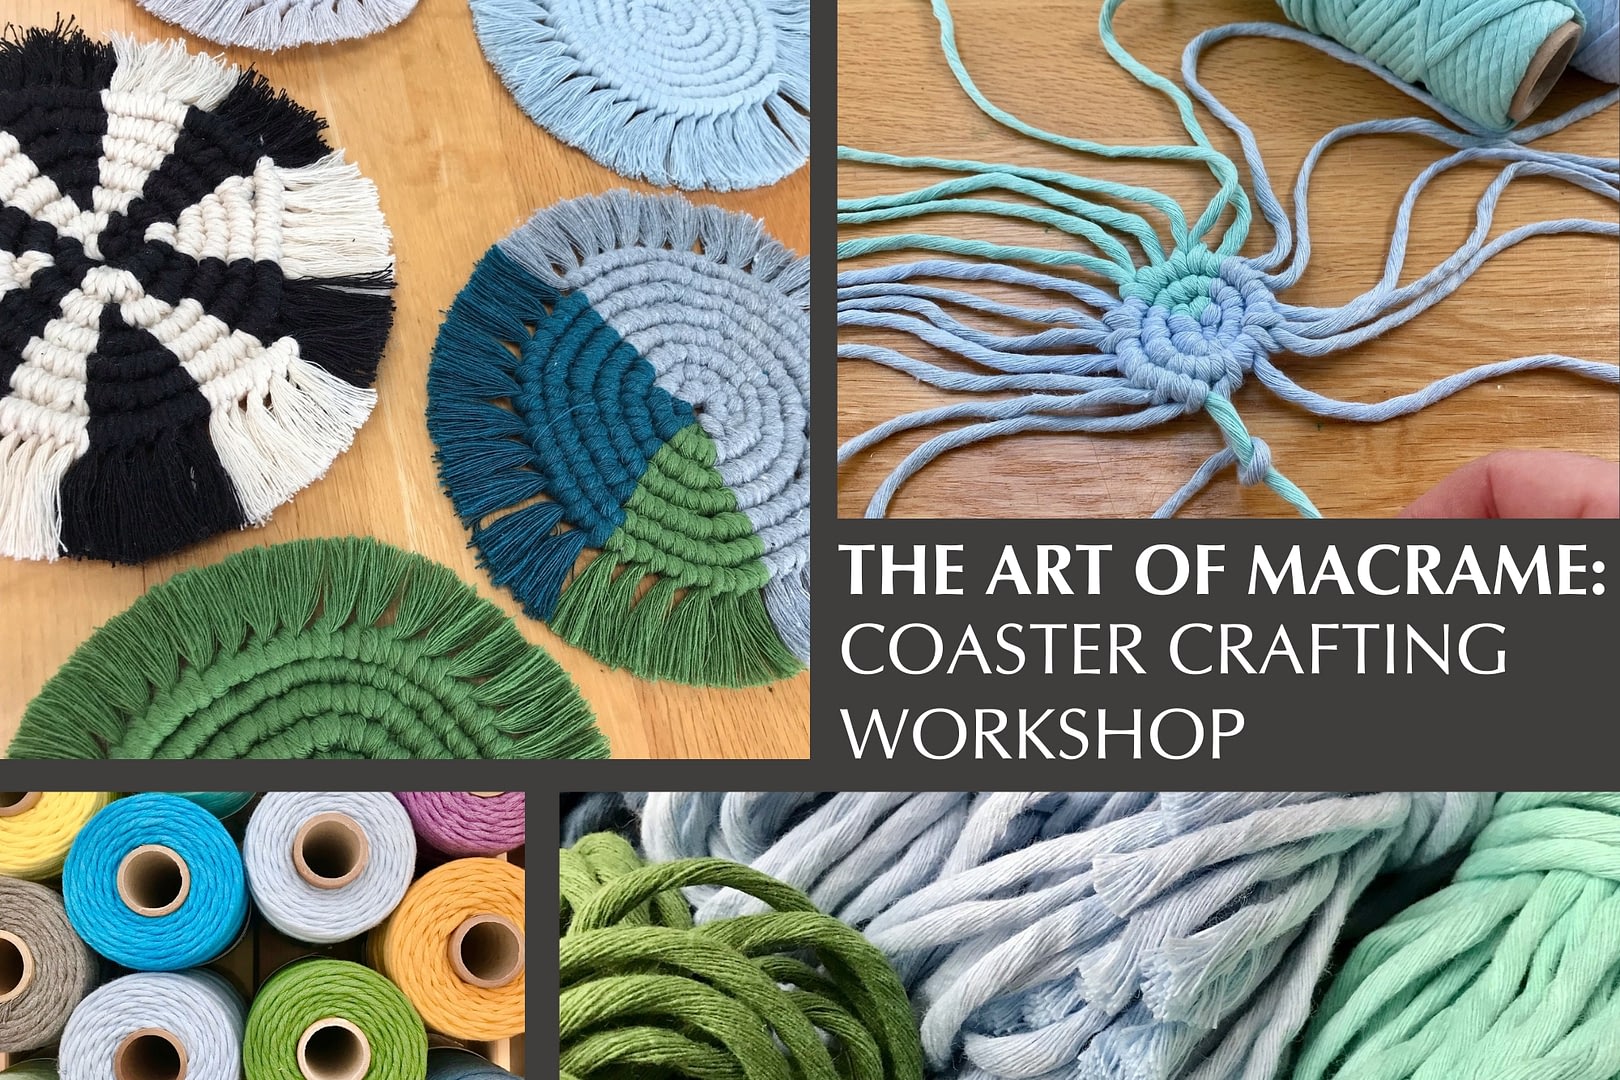 The Art of Macrame: Coaster Crafting Workshop